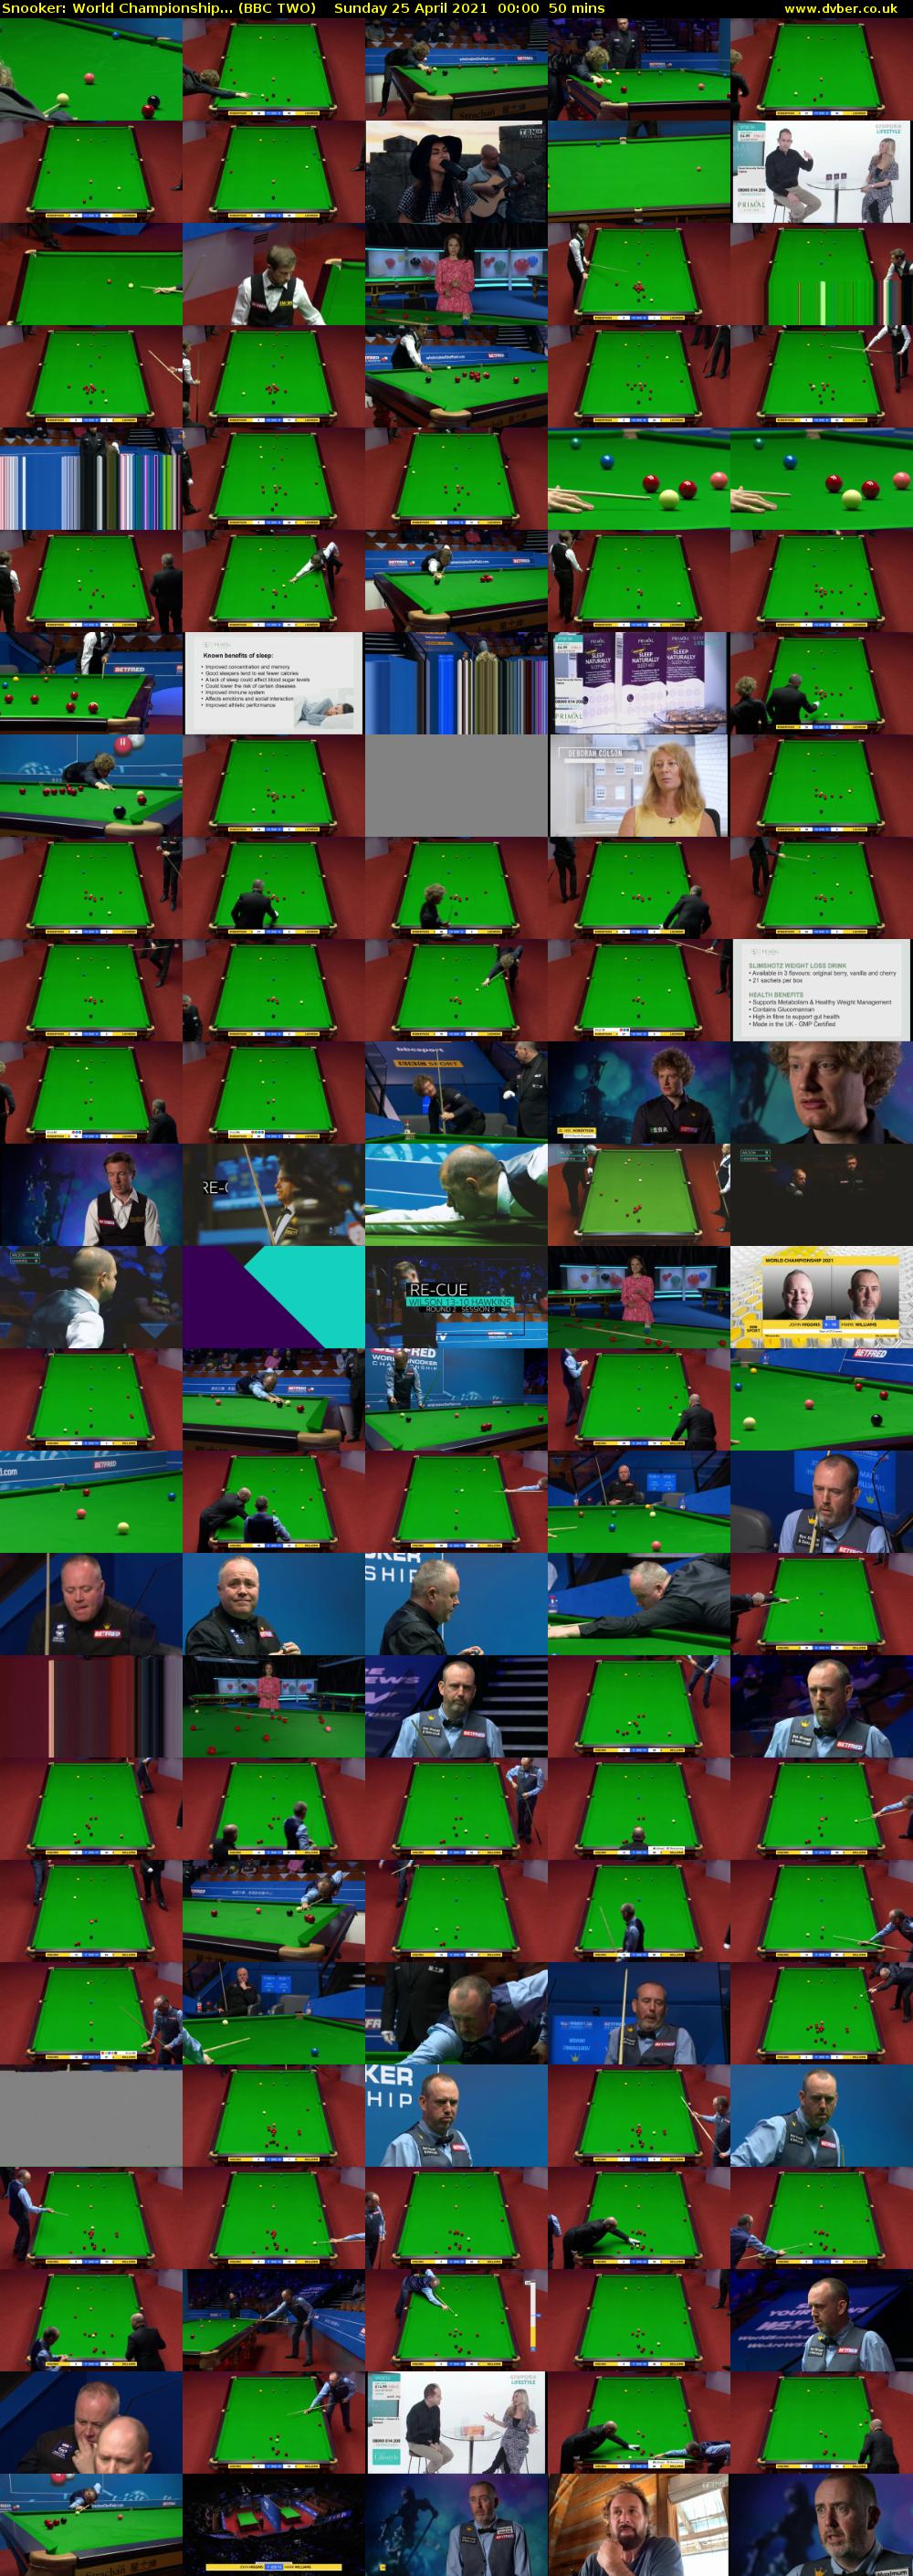 Snooker: World Championship... (BBC TWO) Sunday 25 April 2021 00:00 - 00:50